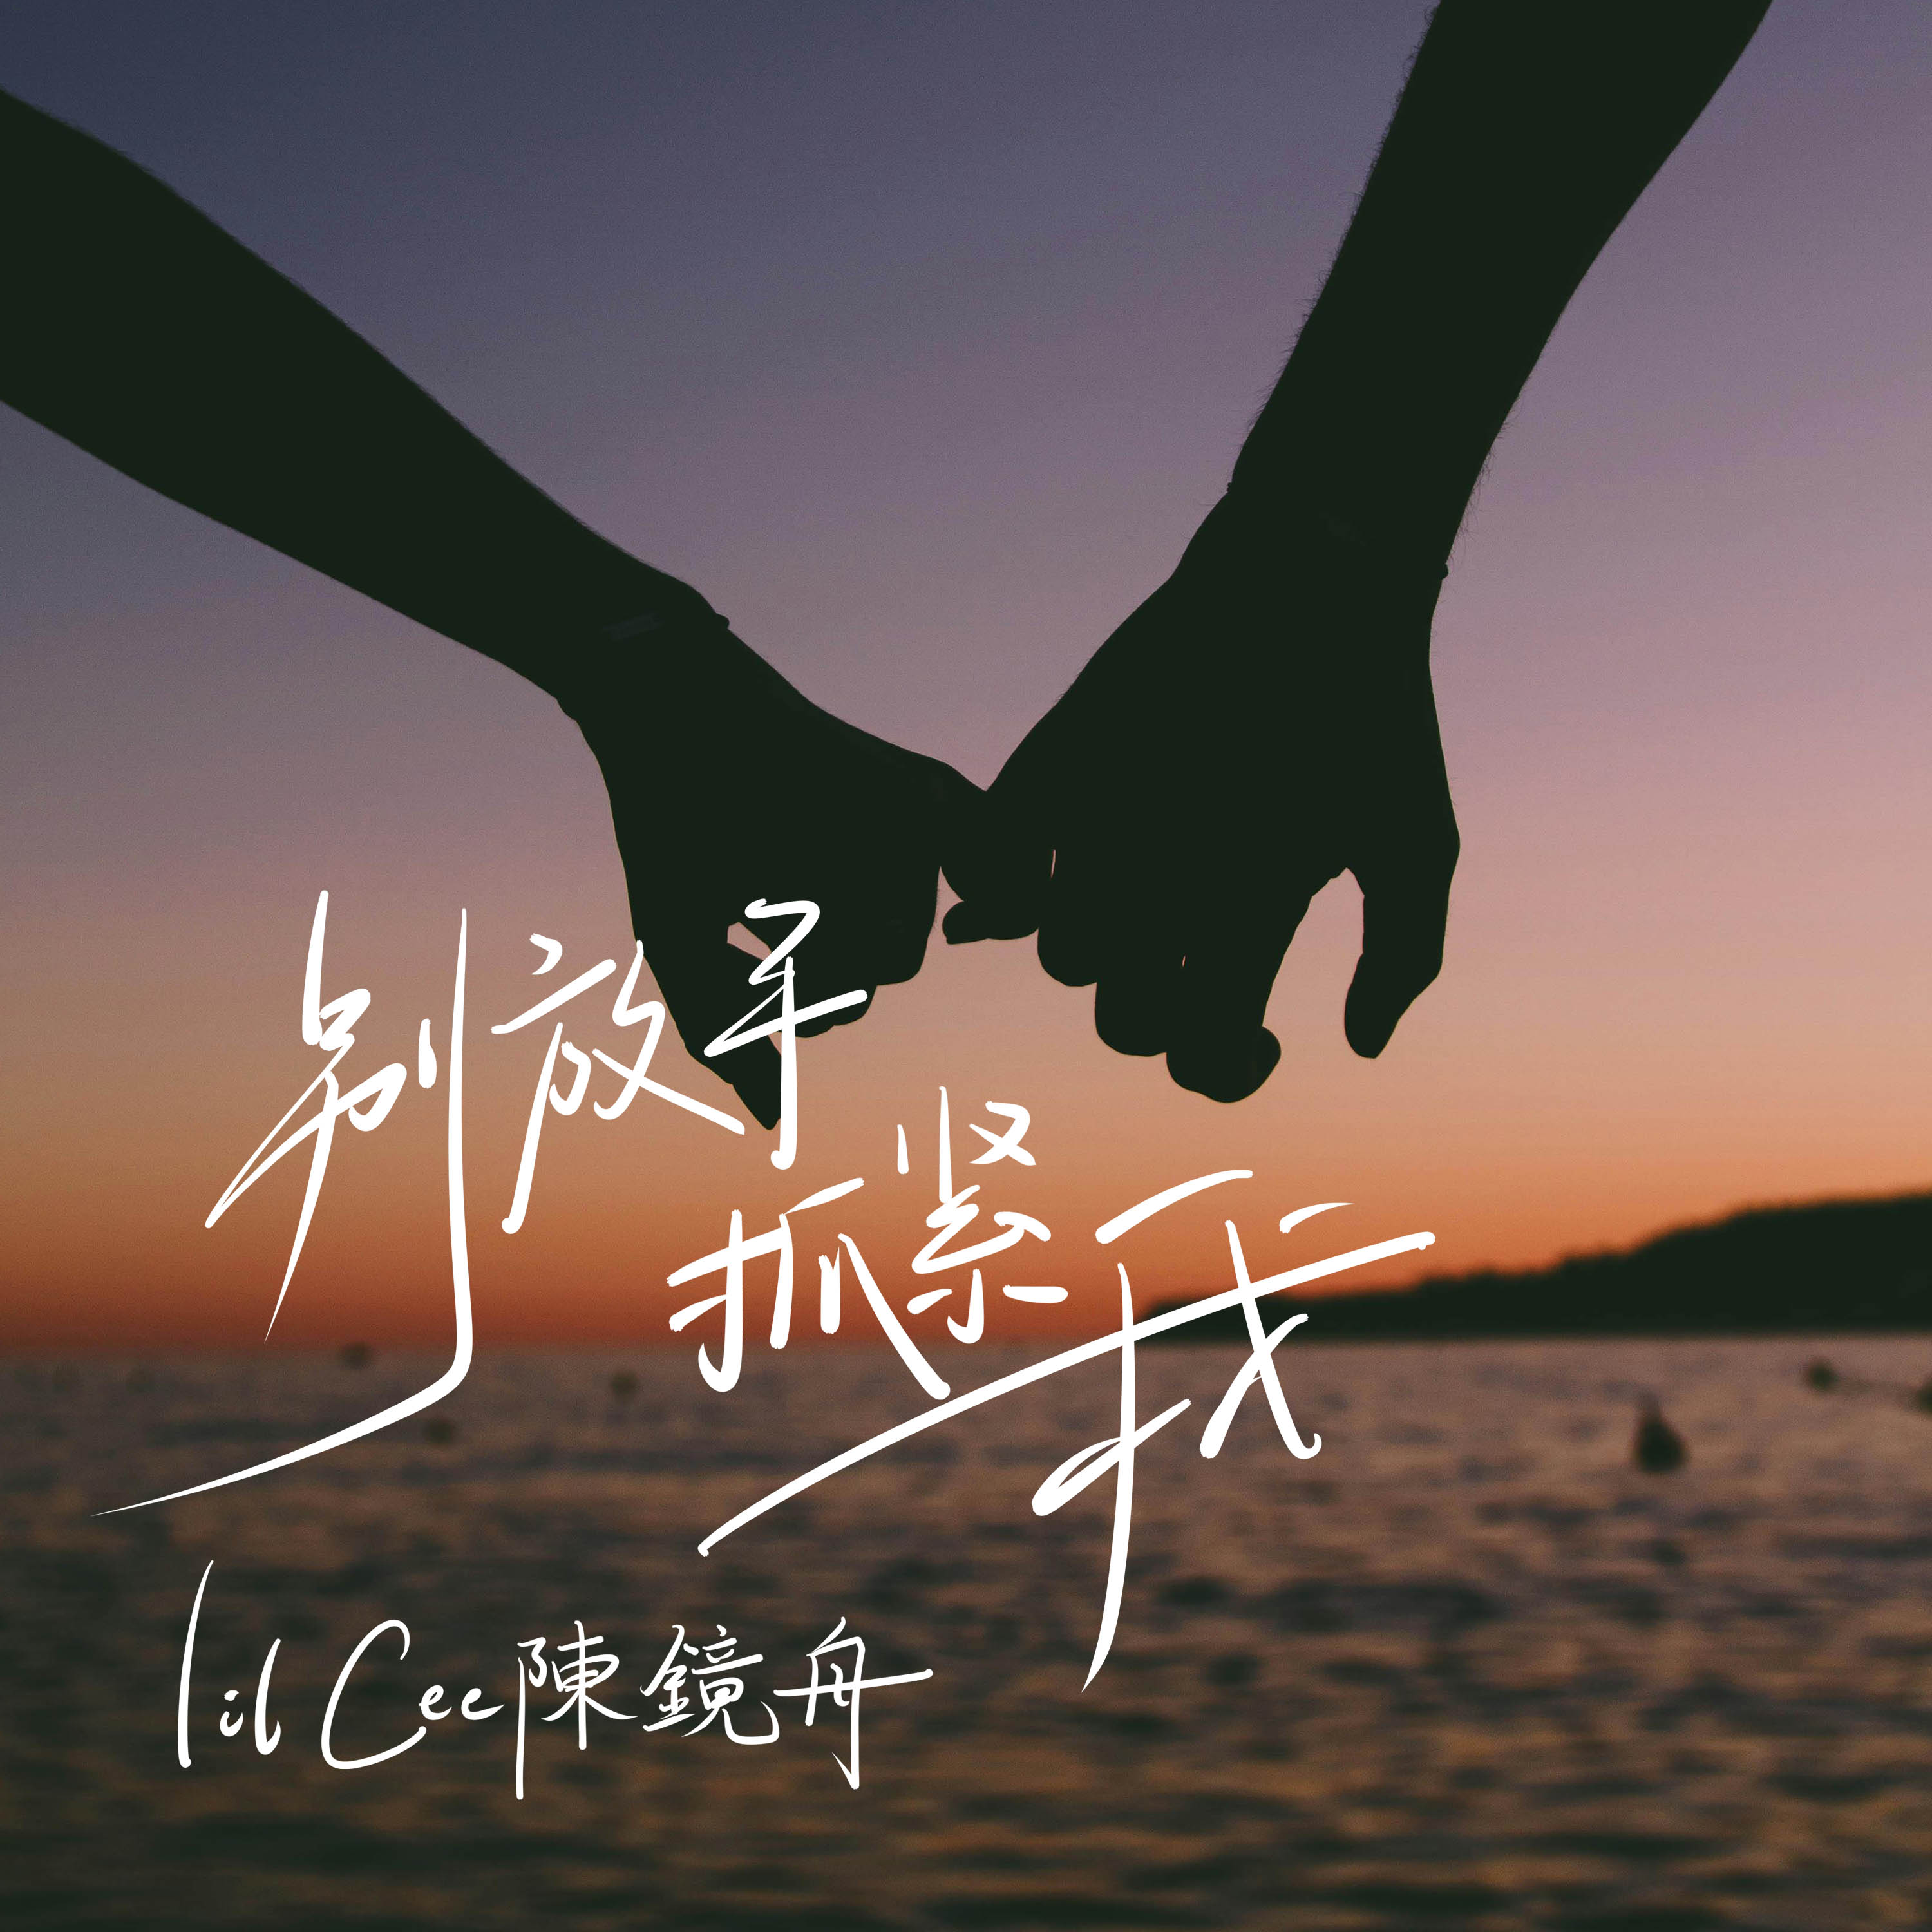 Lil Cee 陳鏡舟 - Take me hand again